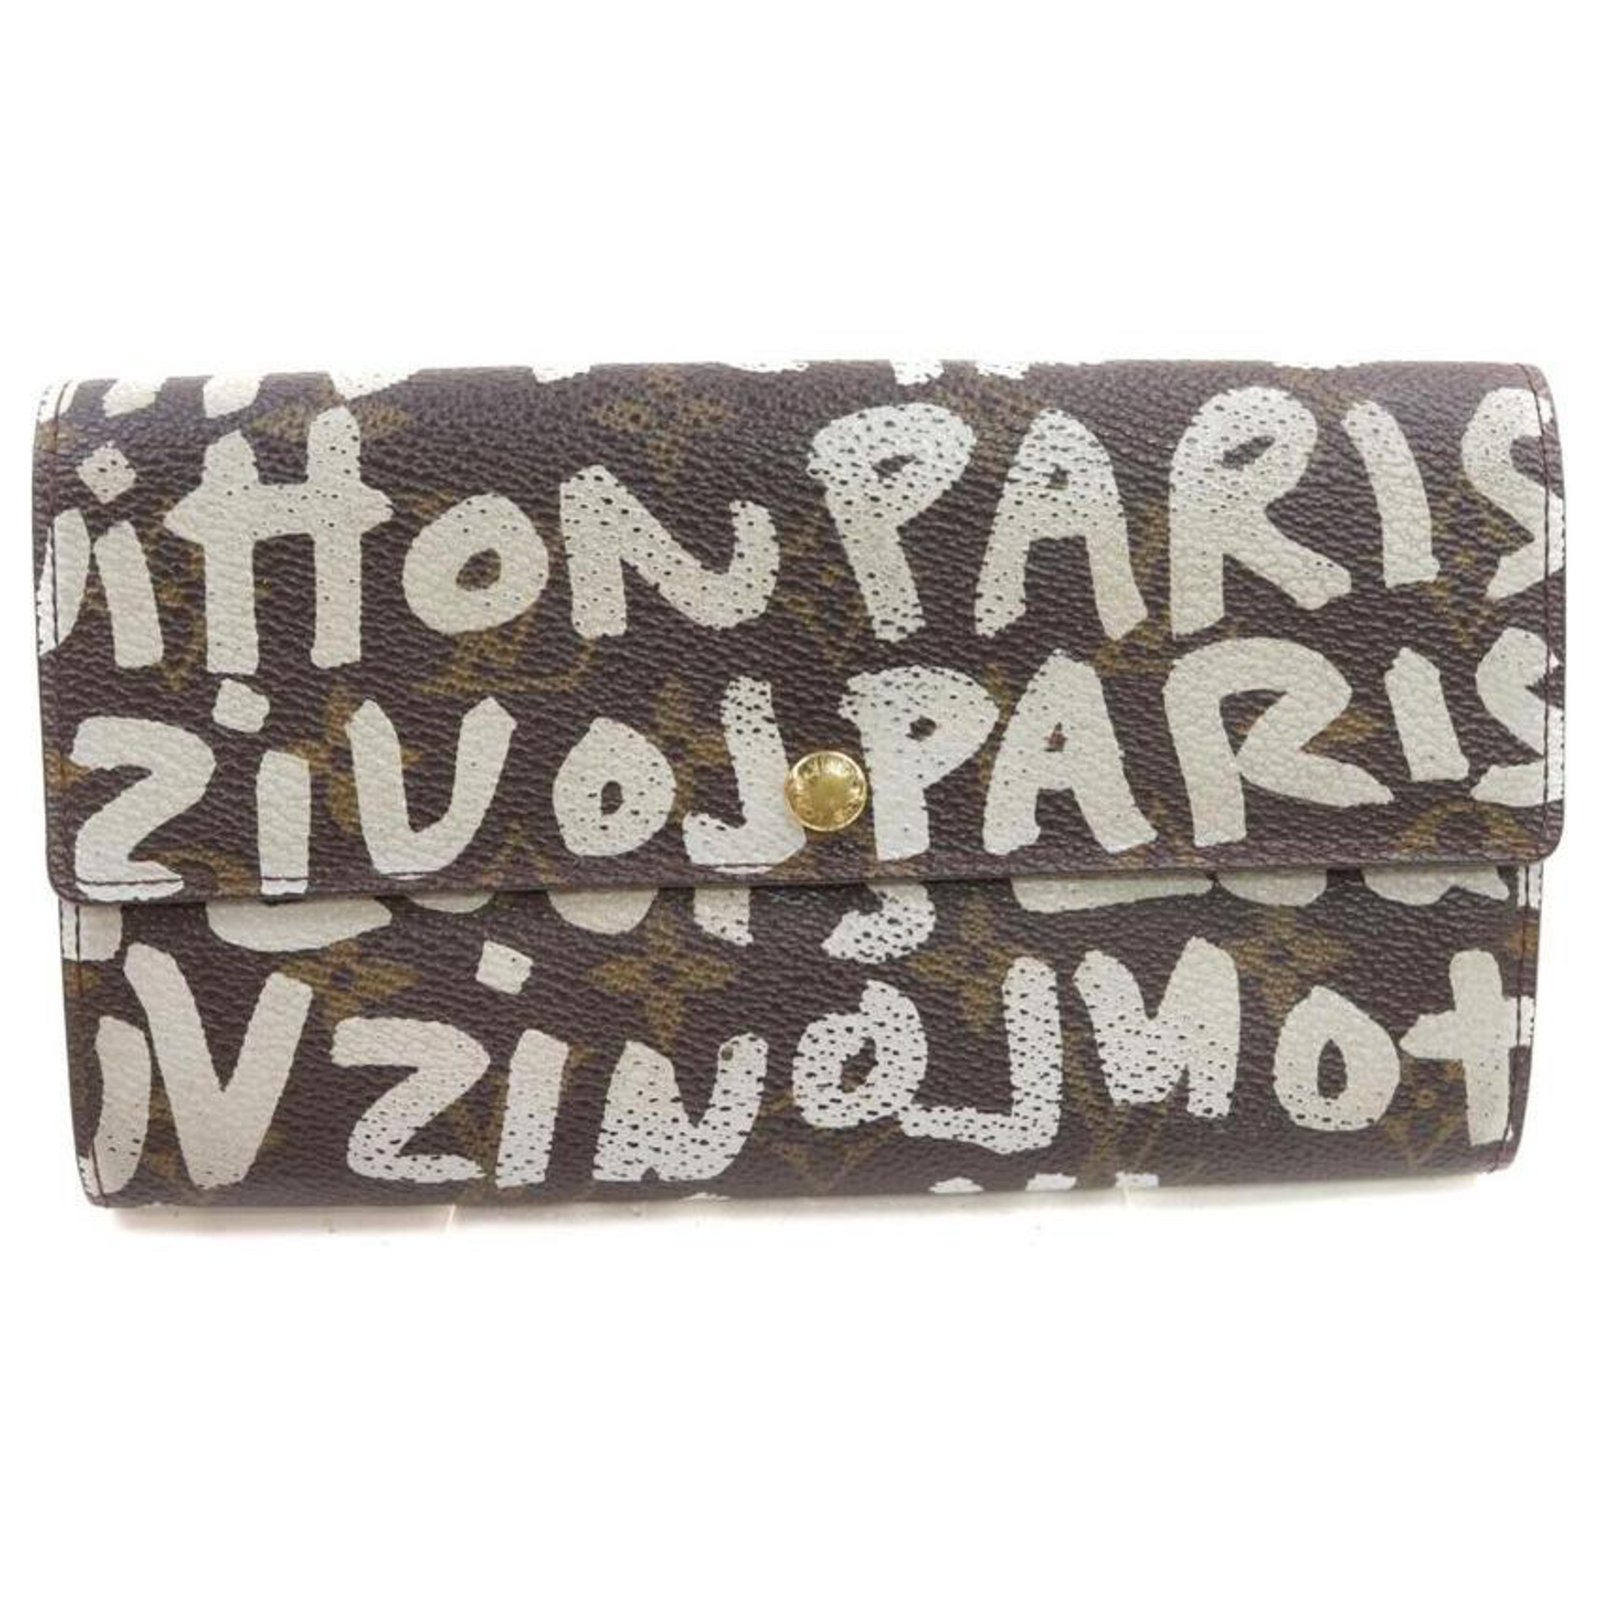 Louis Vuitton Stephen Sprouse Graffiti Wallet